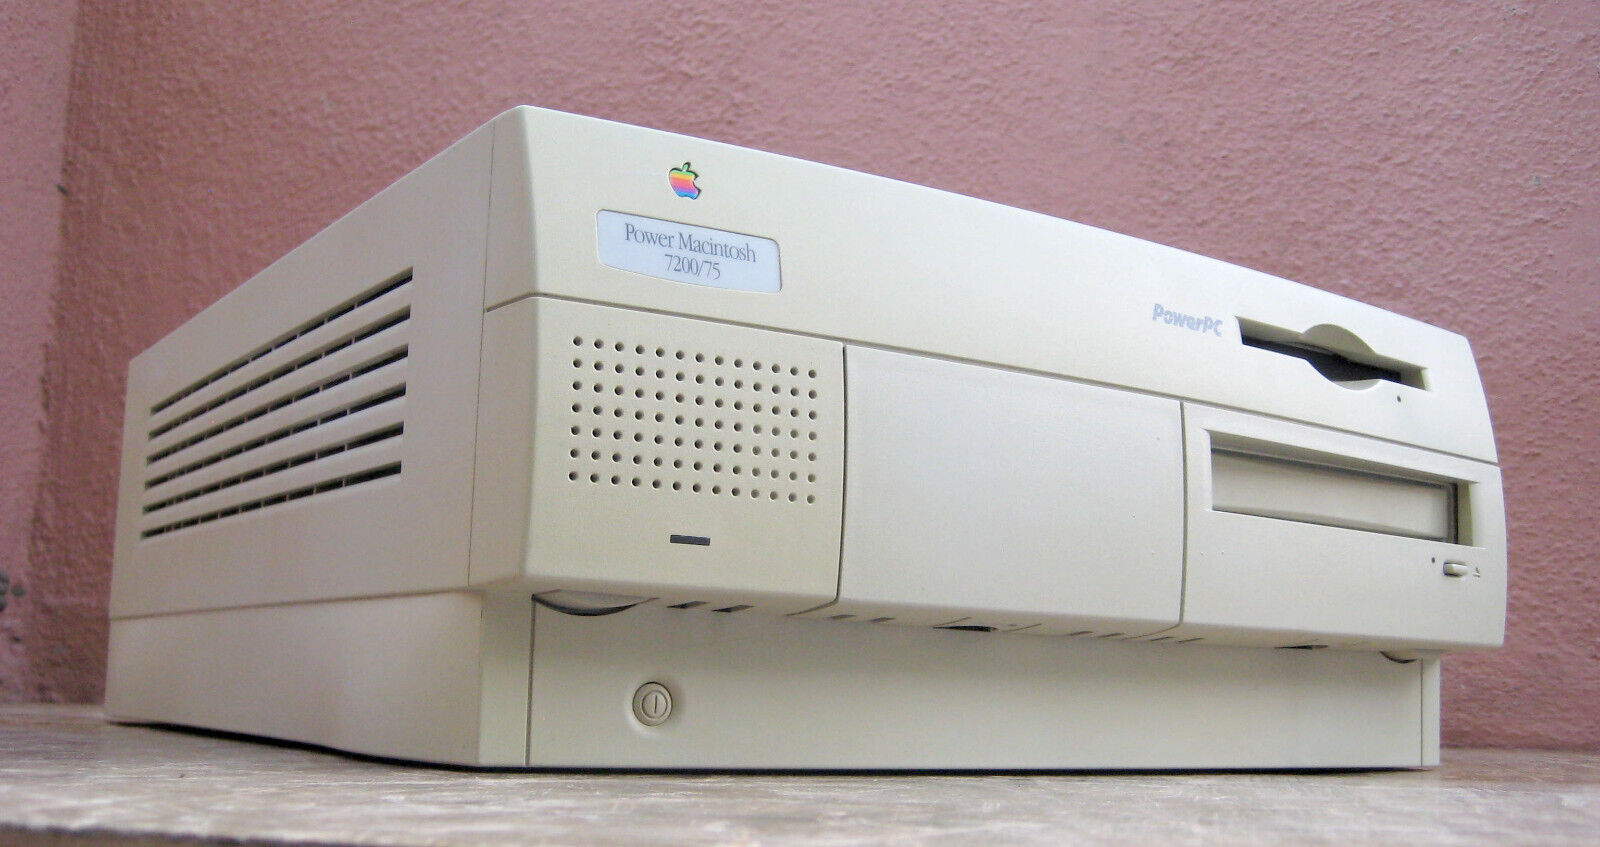 UNUSED FOR 20 YEARS NEAR MINT Apple Power Macintosh 7200/75 M3979 Local PU LA